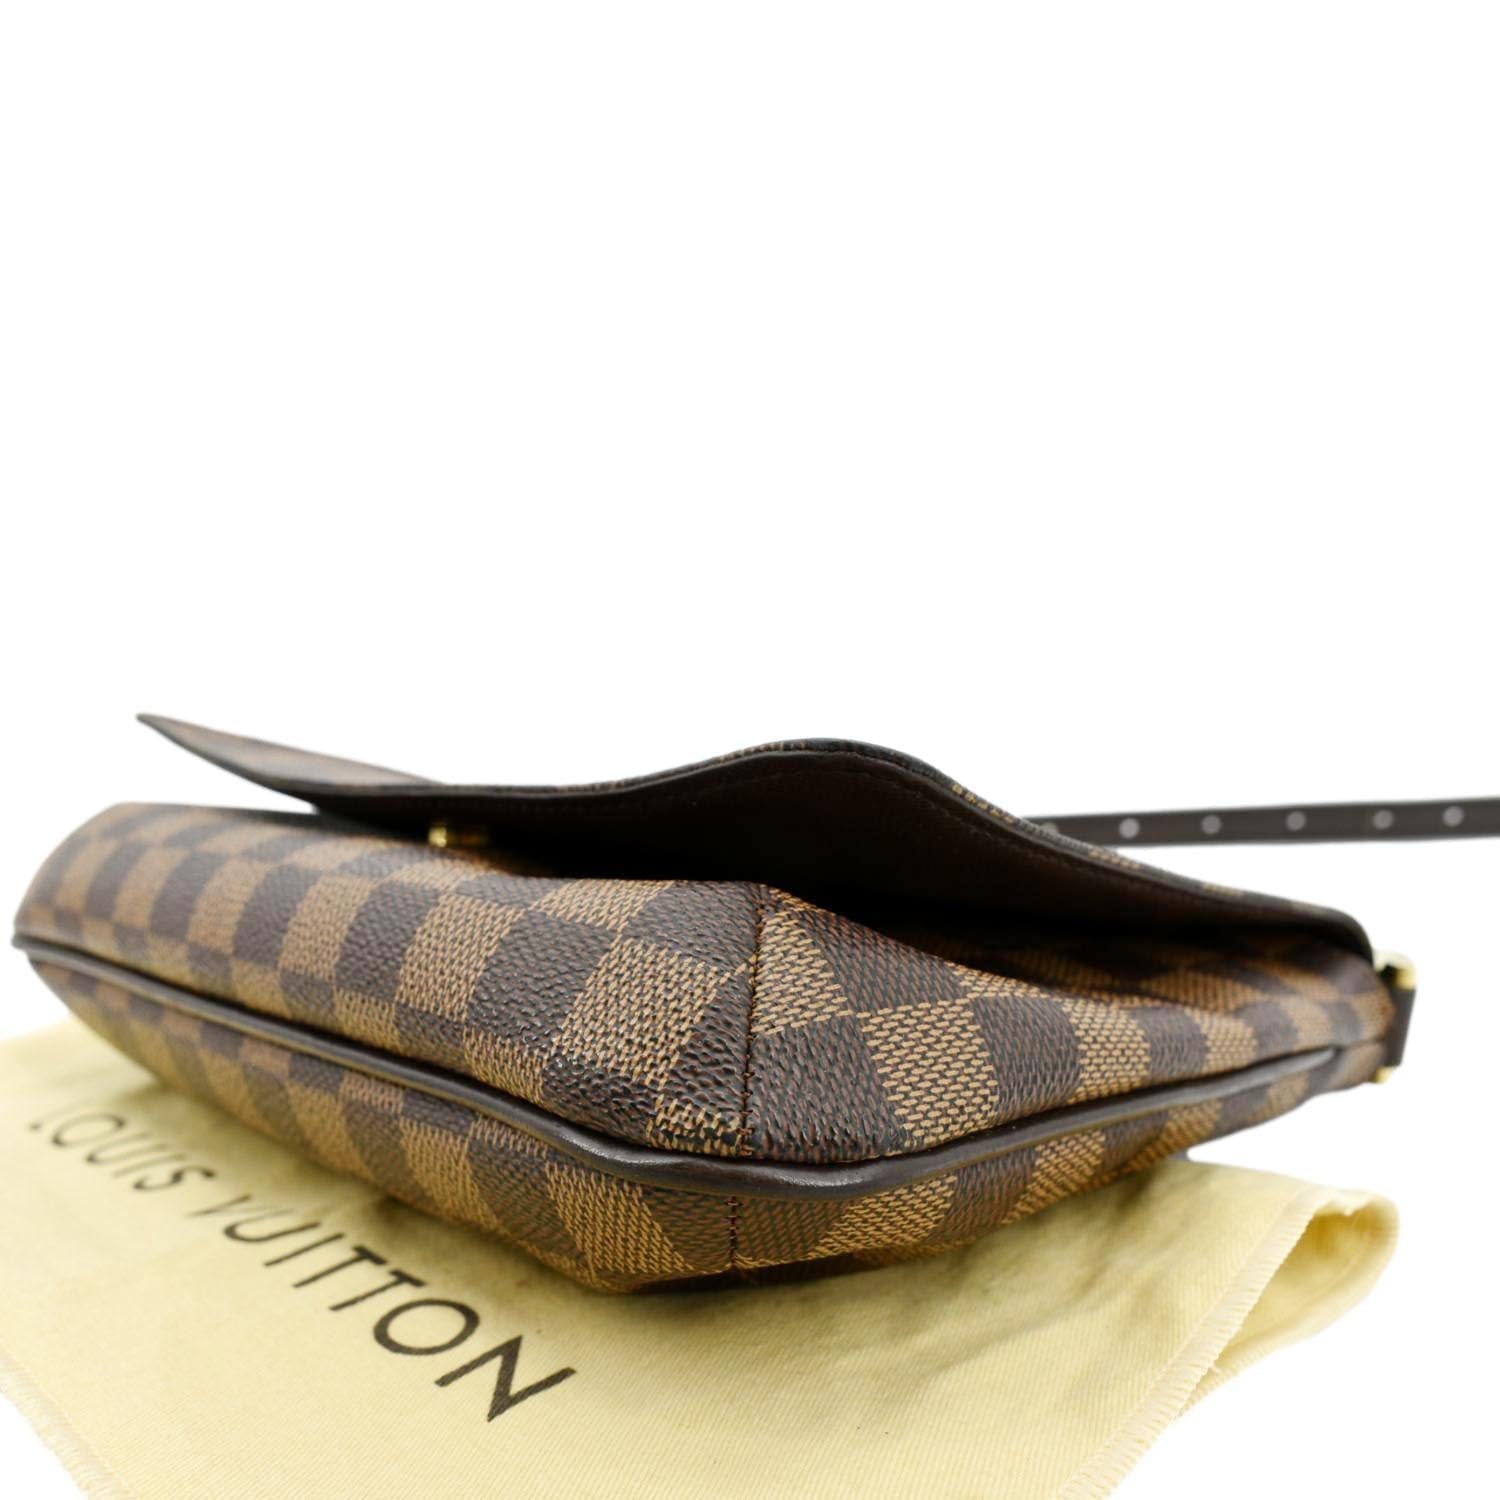 Louis Vuitton Twice Handbag Damier Brown